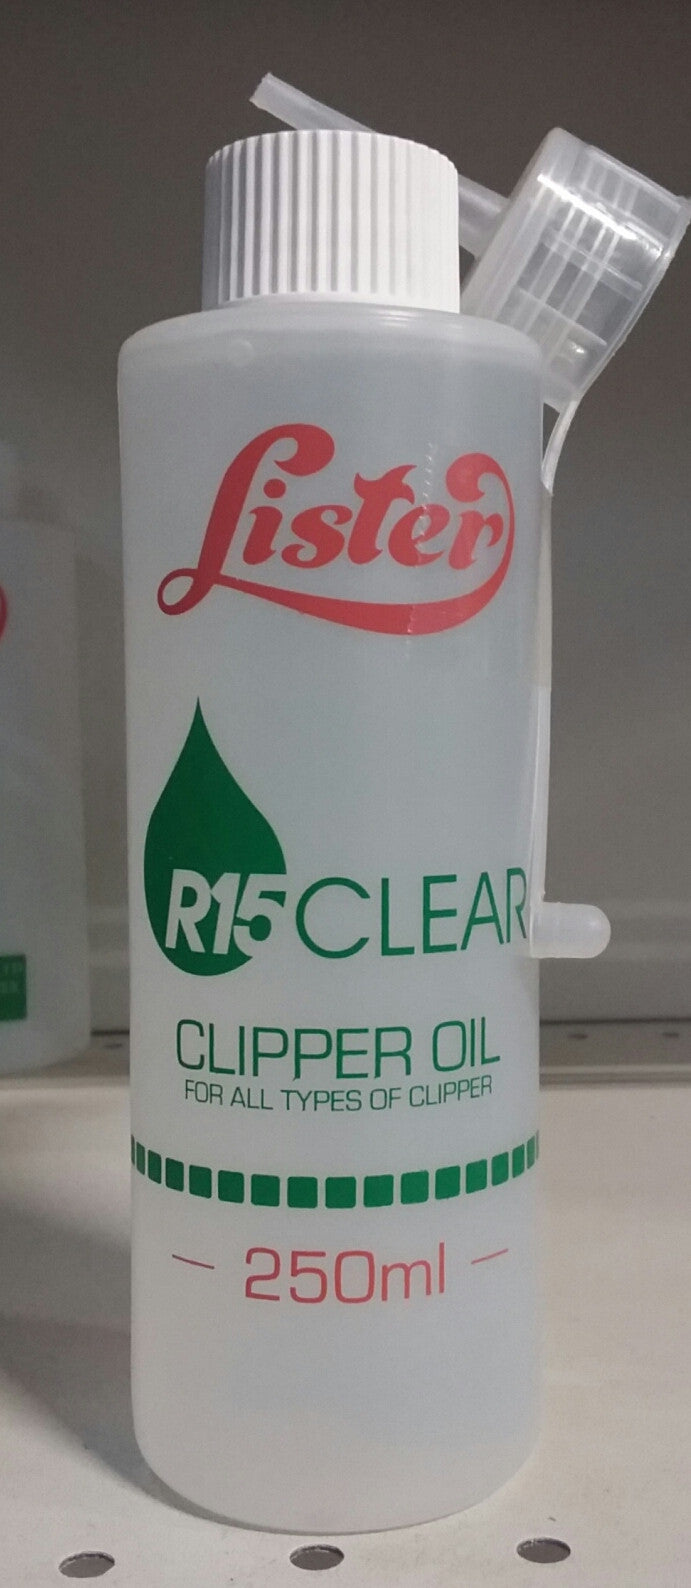 Clipper Oil